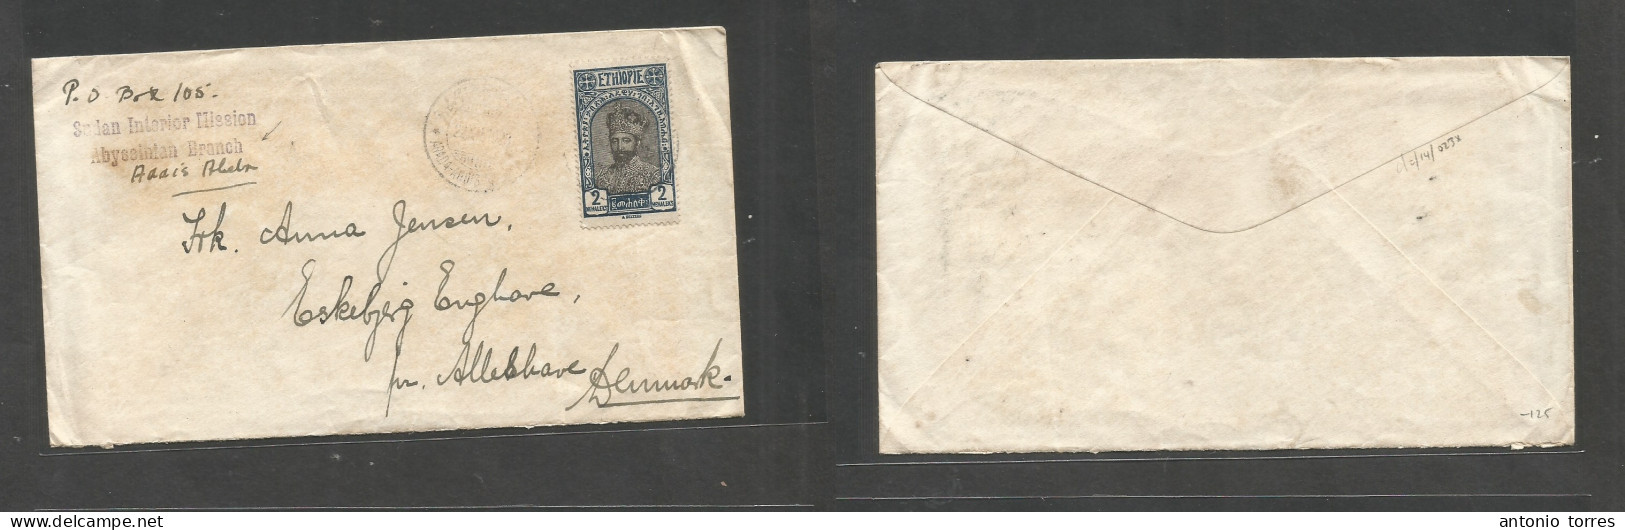 Ethiopia. 1928 (22 Dec) Sudan Mission. Abissinian Branch. Abada, Addis Abeba - Denmark, Eskebjeg. 2m Single Fkd Envelope - Ethiopië